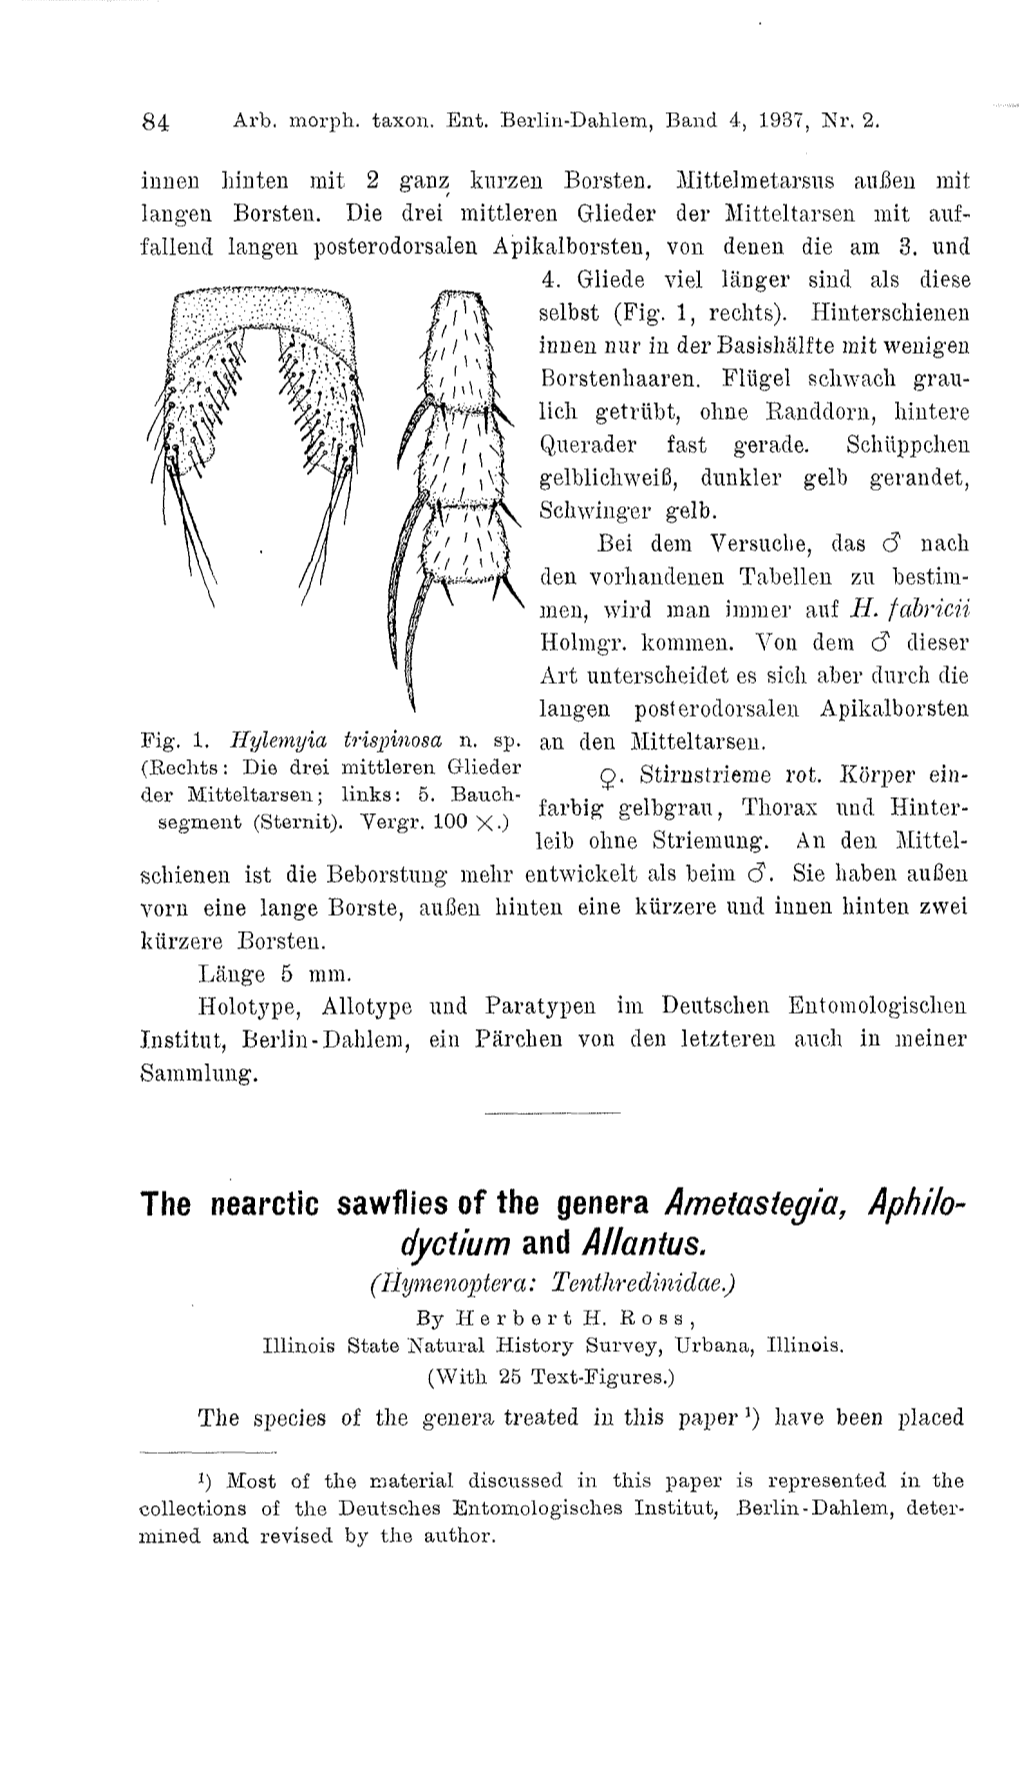 The Nearctic Sawflies of the Genera Ametastegia, Aphilo- Dyctium and Allantus